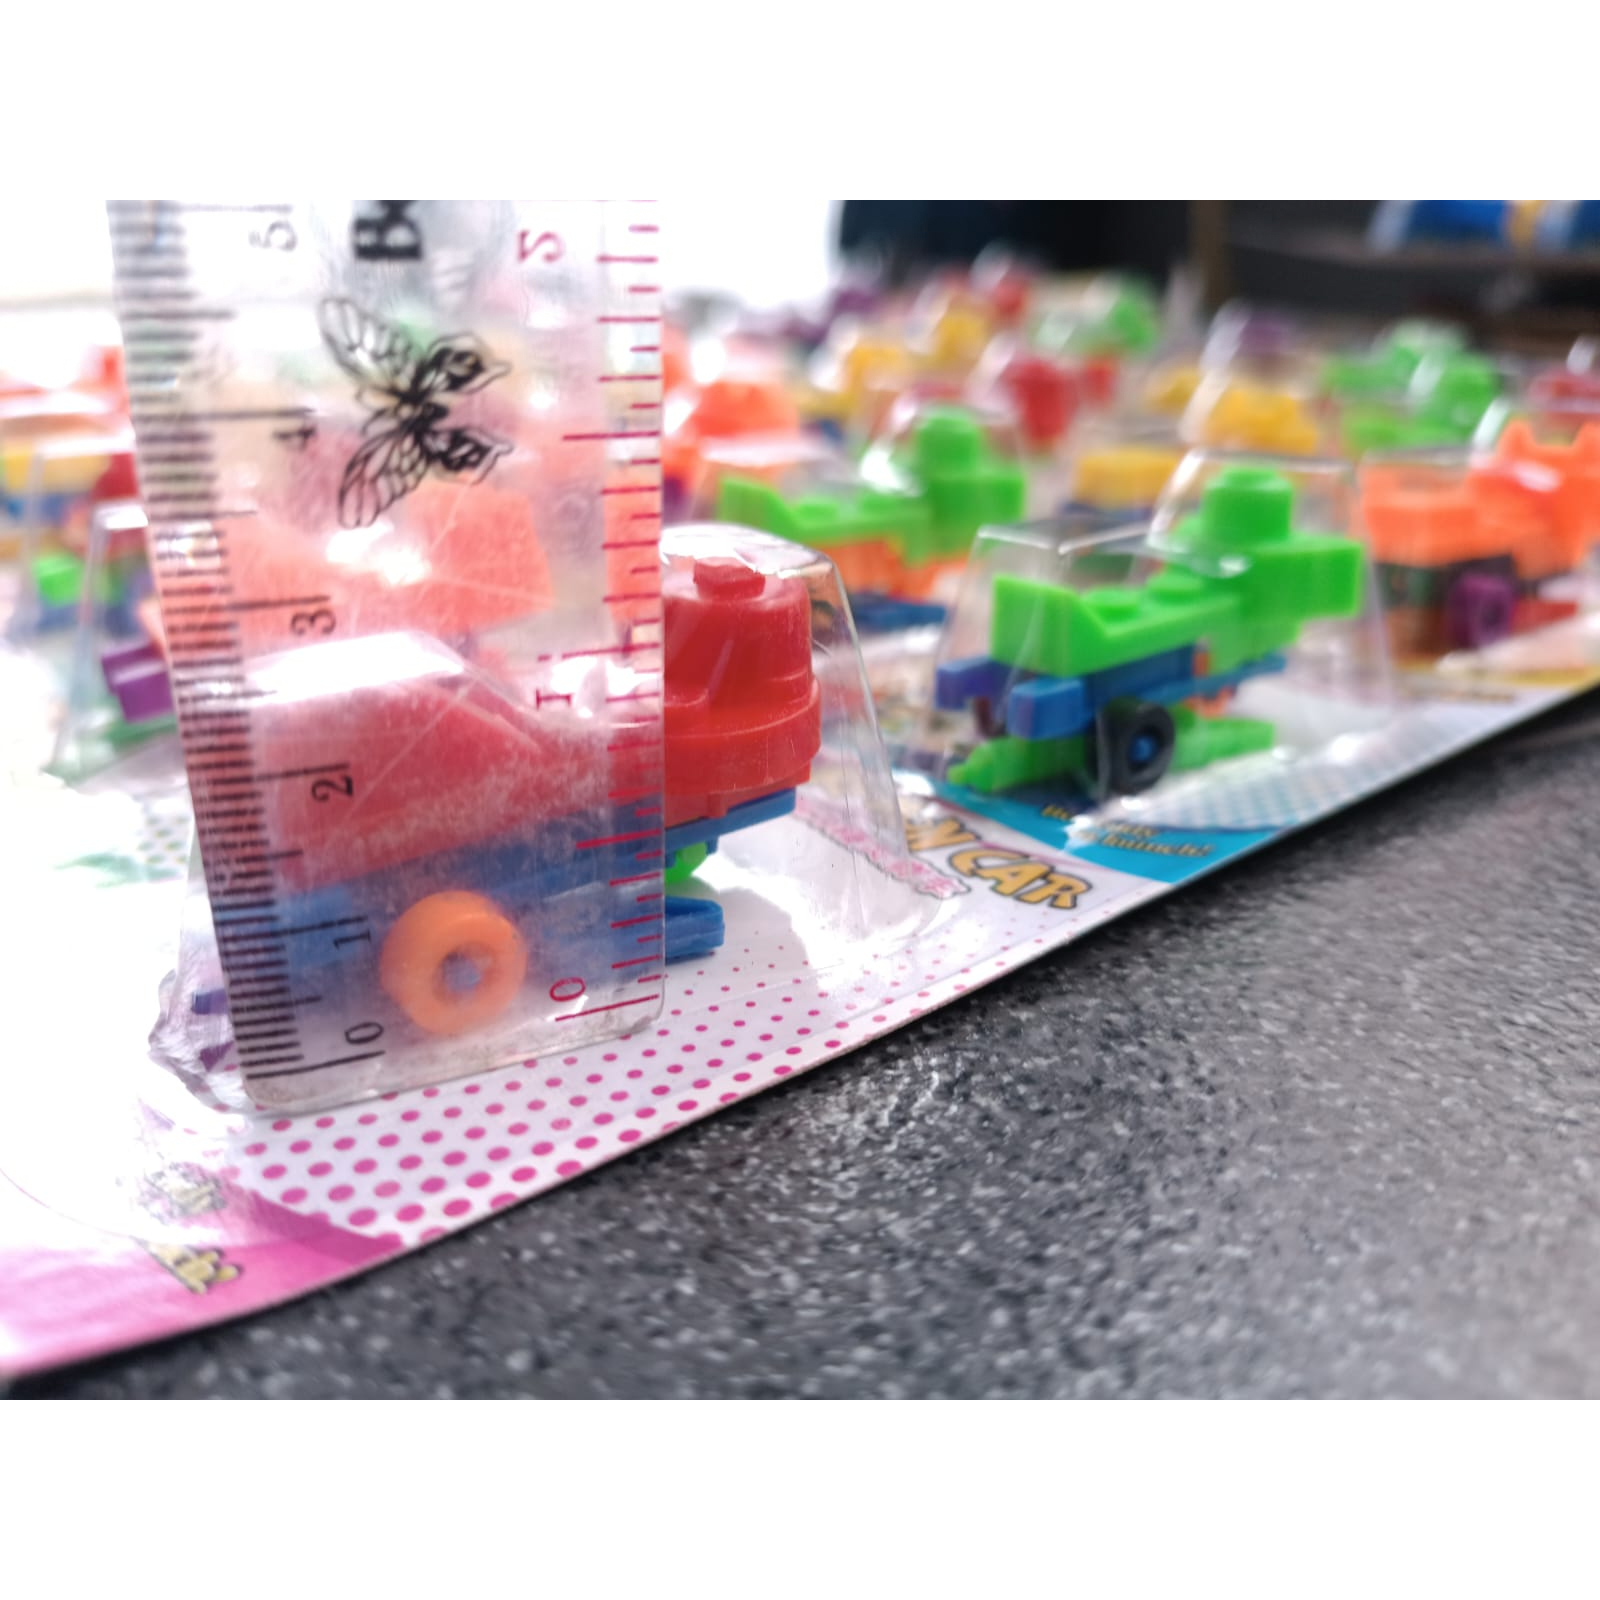 MOBIL MOBILAN KECIL LEGO POKEMON PLASTIK WARNA WARNI 1 LEMBAR ISI 30 PCS